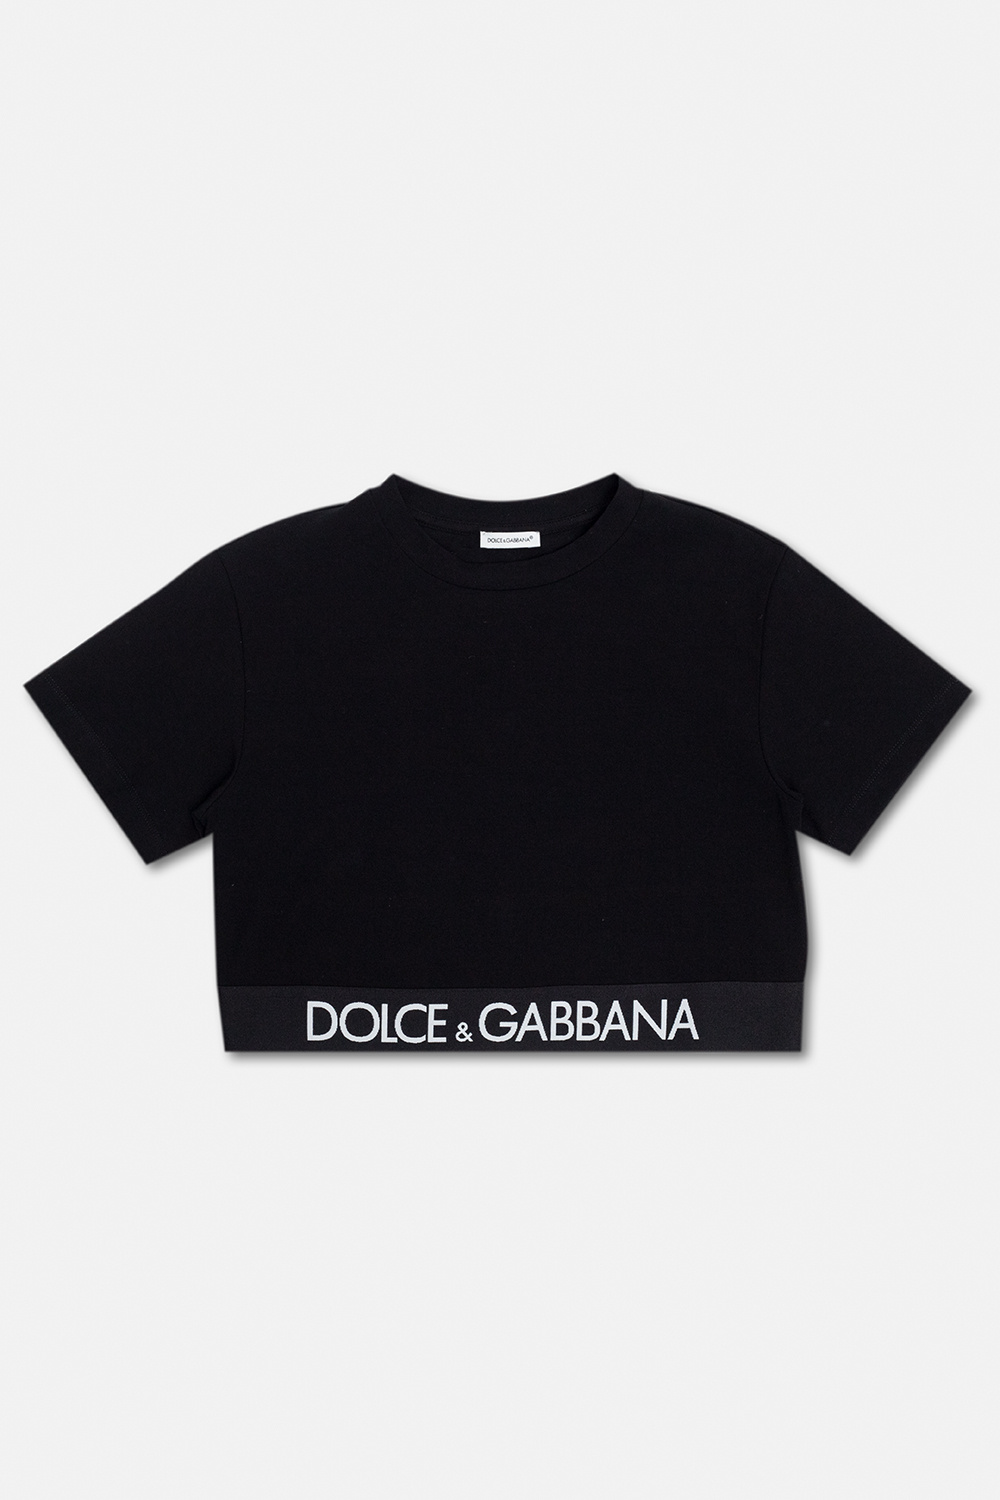 Dolce & Gabbana Kids Dolce & Gabbana 733812 Estola Piel